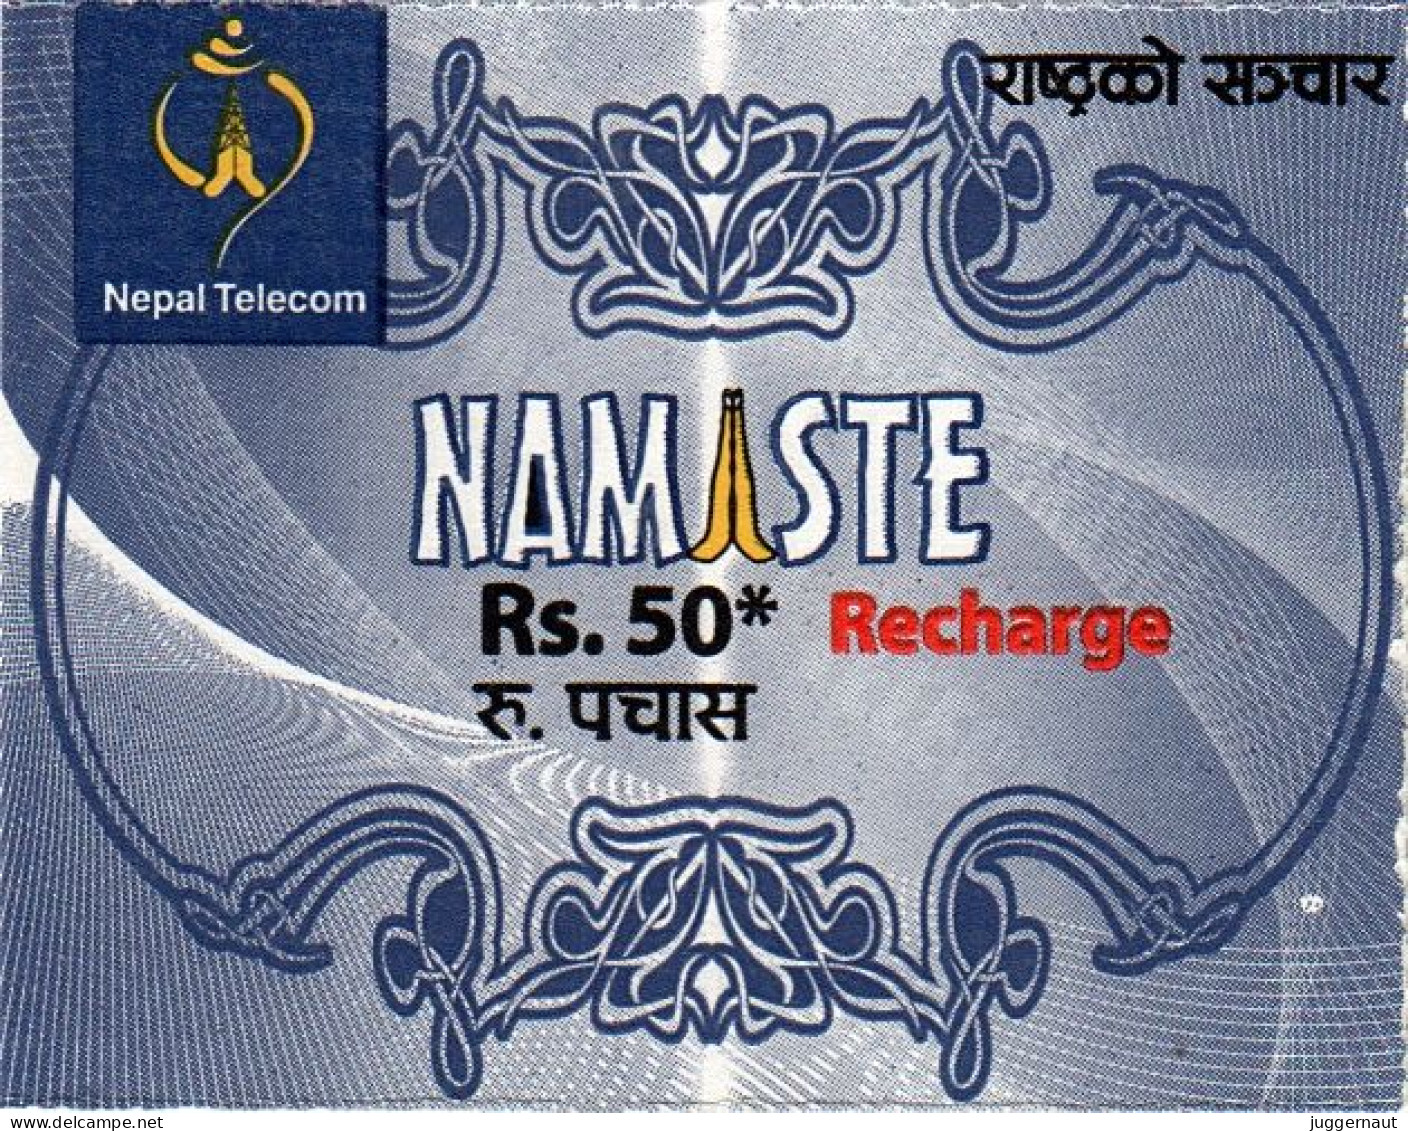 Nepal Telecom Rs.50 Mobile Mini Recharge Card Used - Nepal